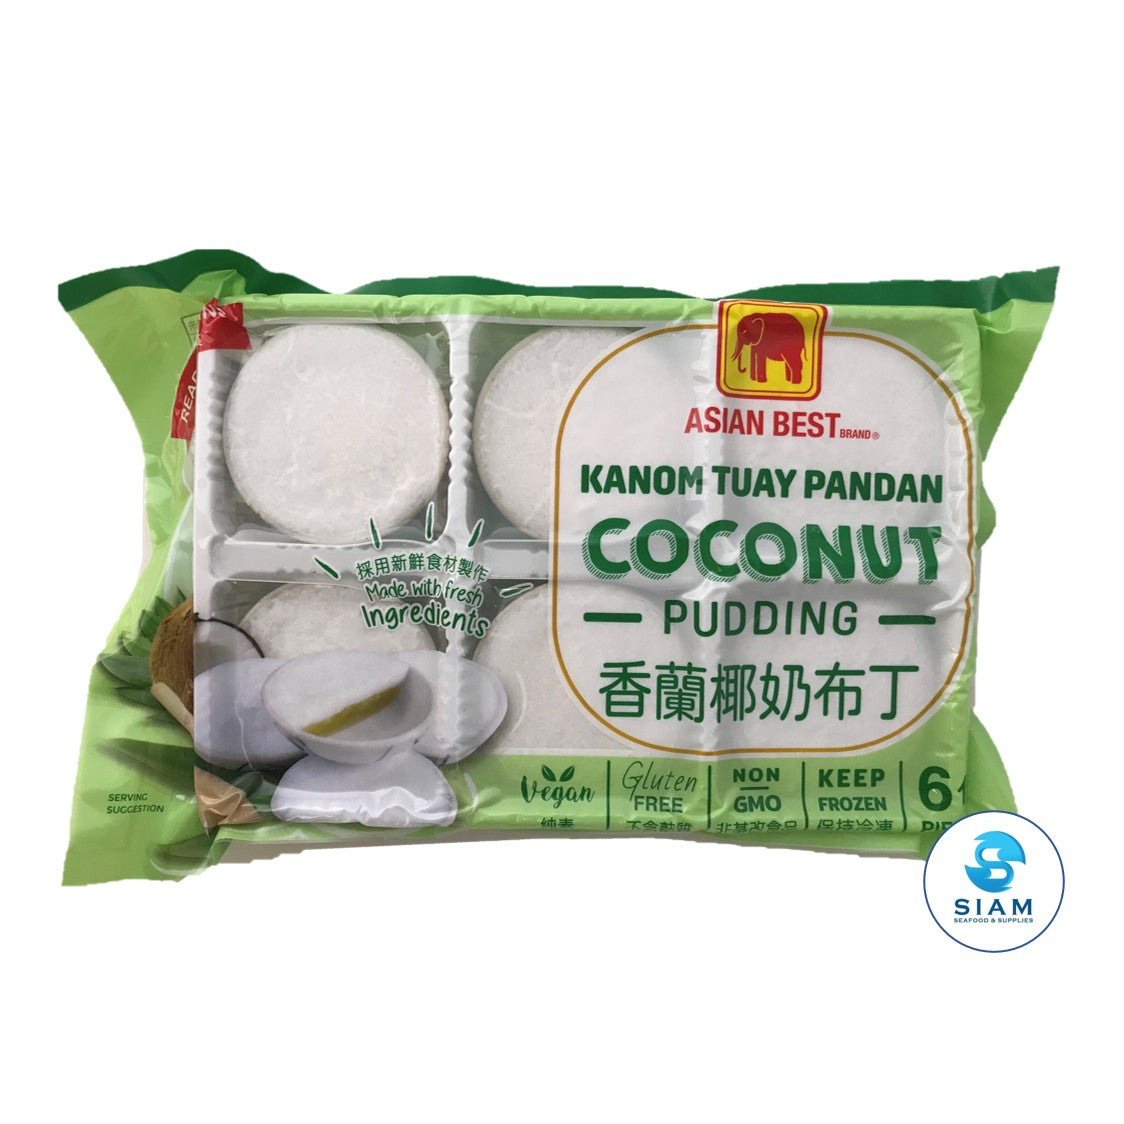 🐣. Offer Xtras! Coconut Pudding Pandan (Kanom Tuay) , Frozen - Asian Best (6 pcs, 7 oz) ขนมถ้วยใบเตย for $5.35 #cookathome #Siamseafoods